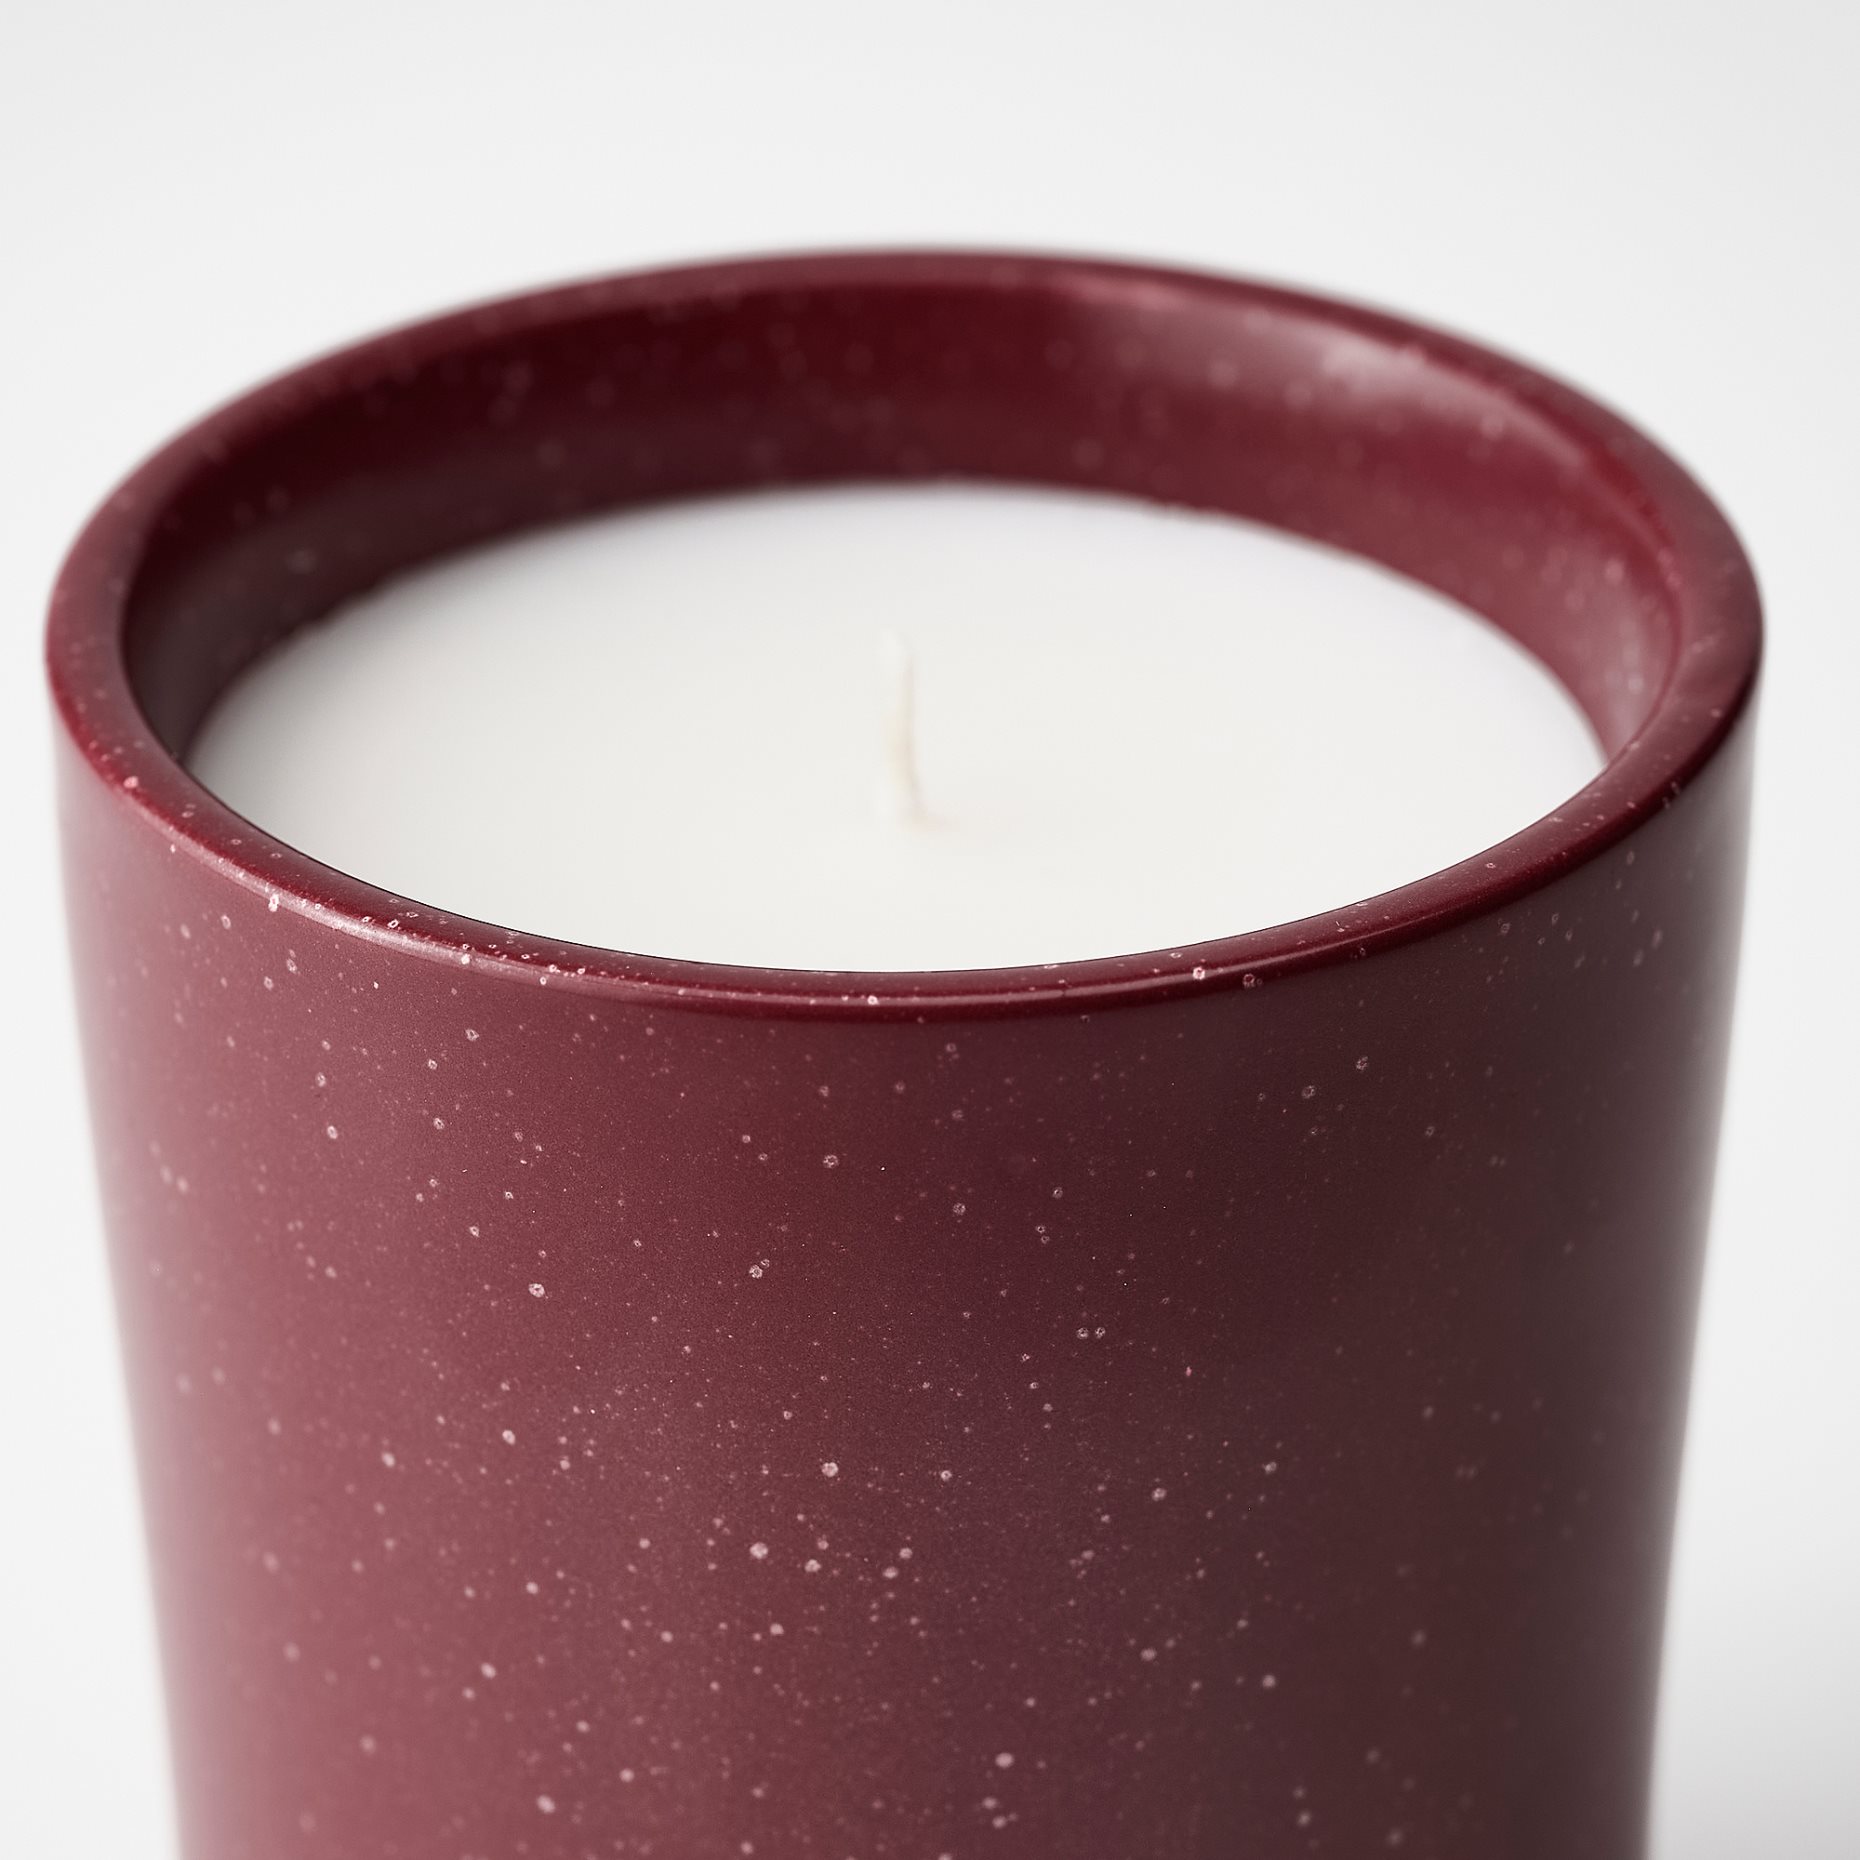 STÖRTSKÖN, scented candle in ceramic jar/Berries, 50 hr, 505.021.98